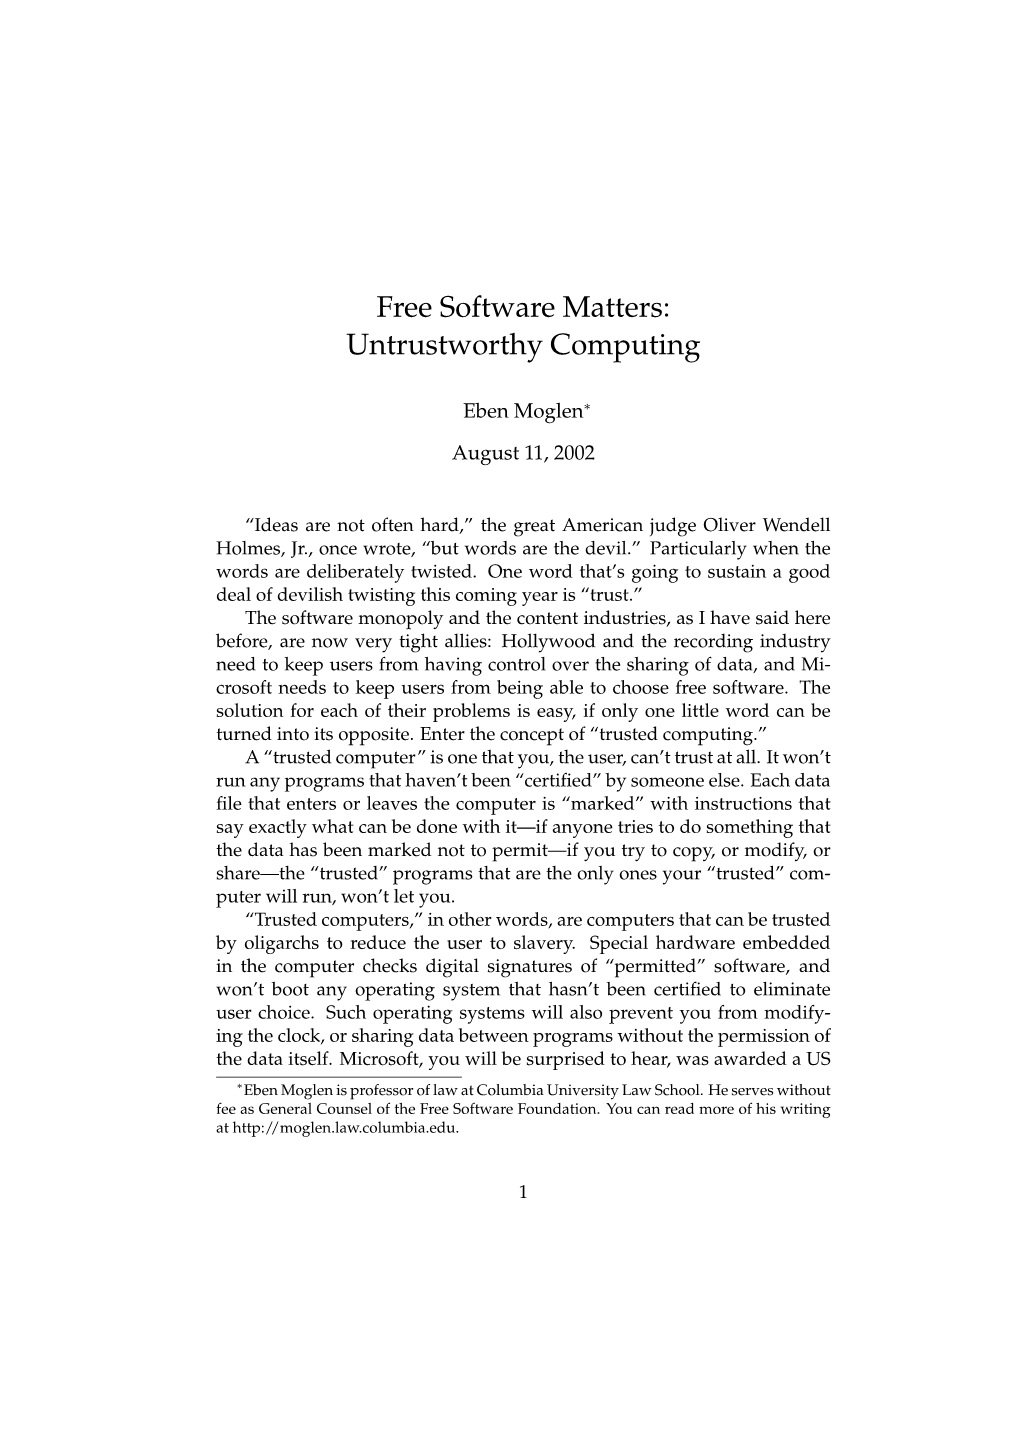 Free Software Matters: Untrustworthy Computing